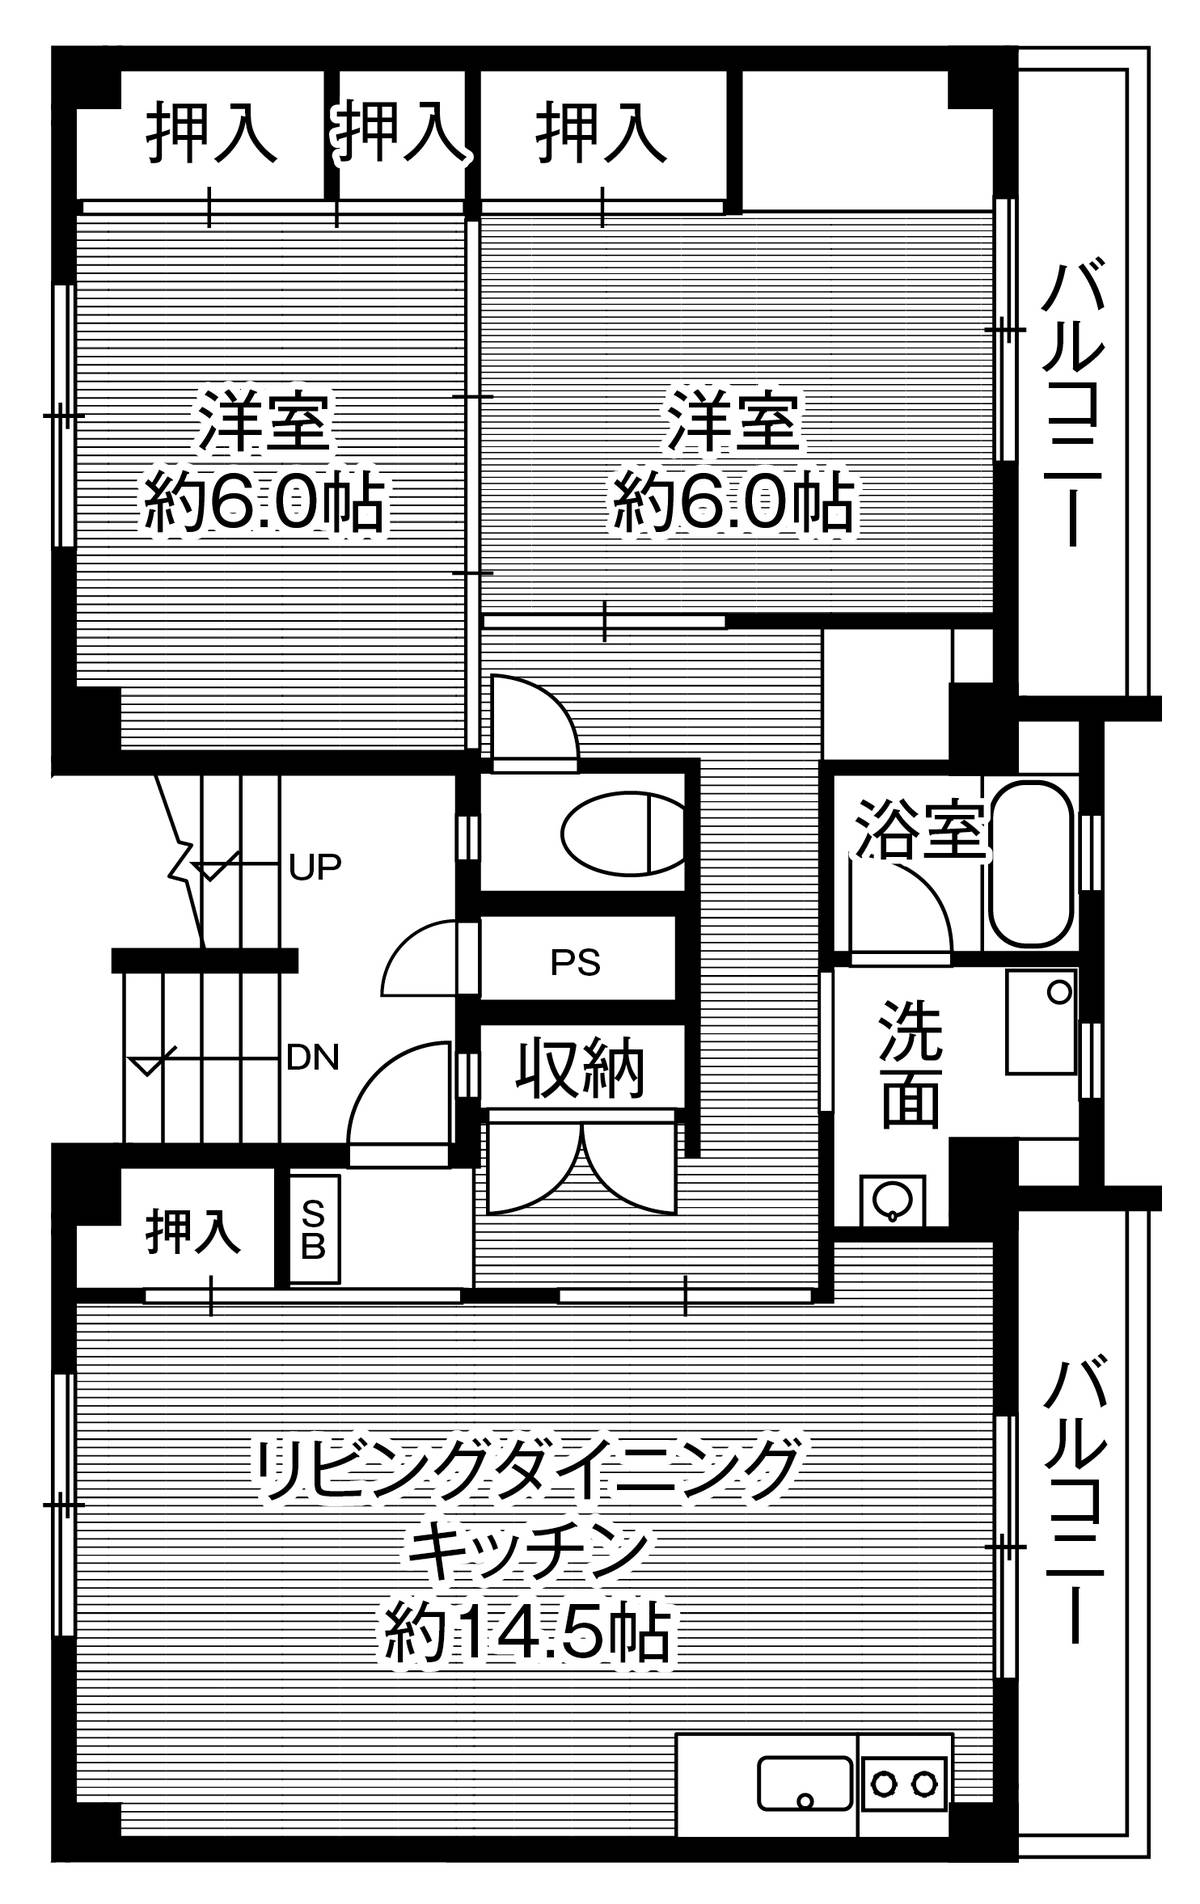 2LDK floorplan of Village House Misono in Oita-shi